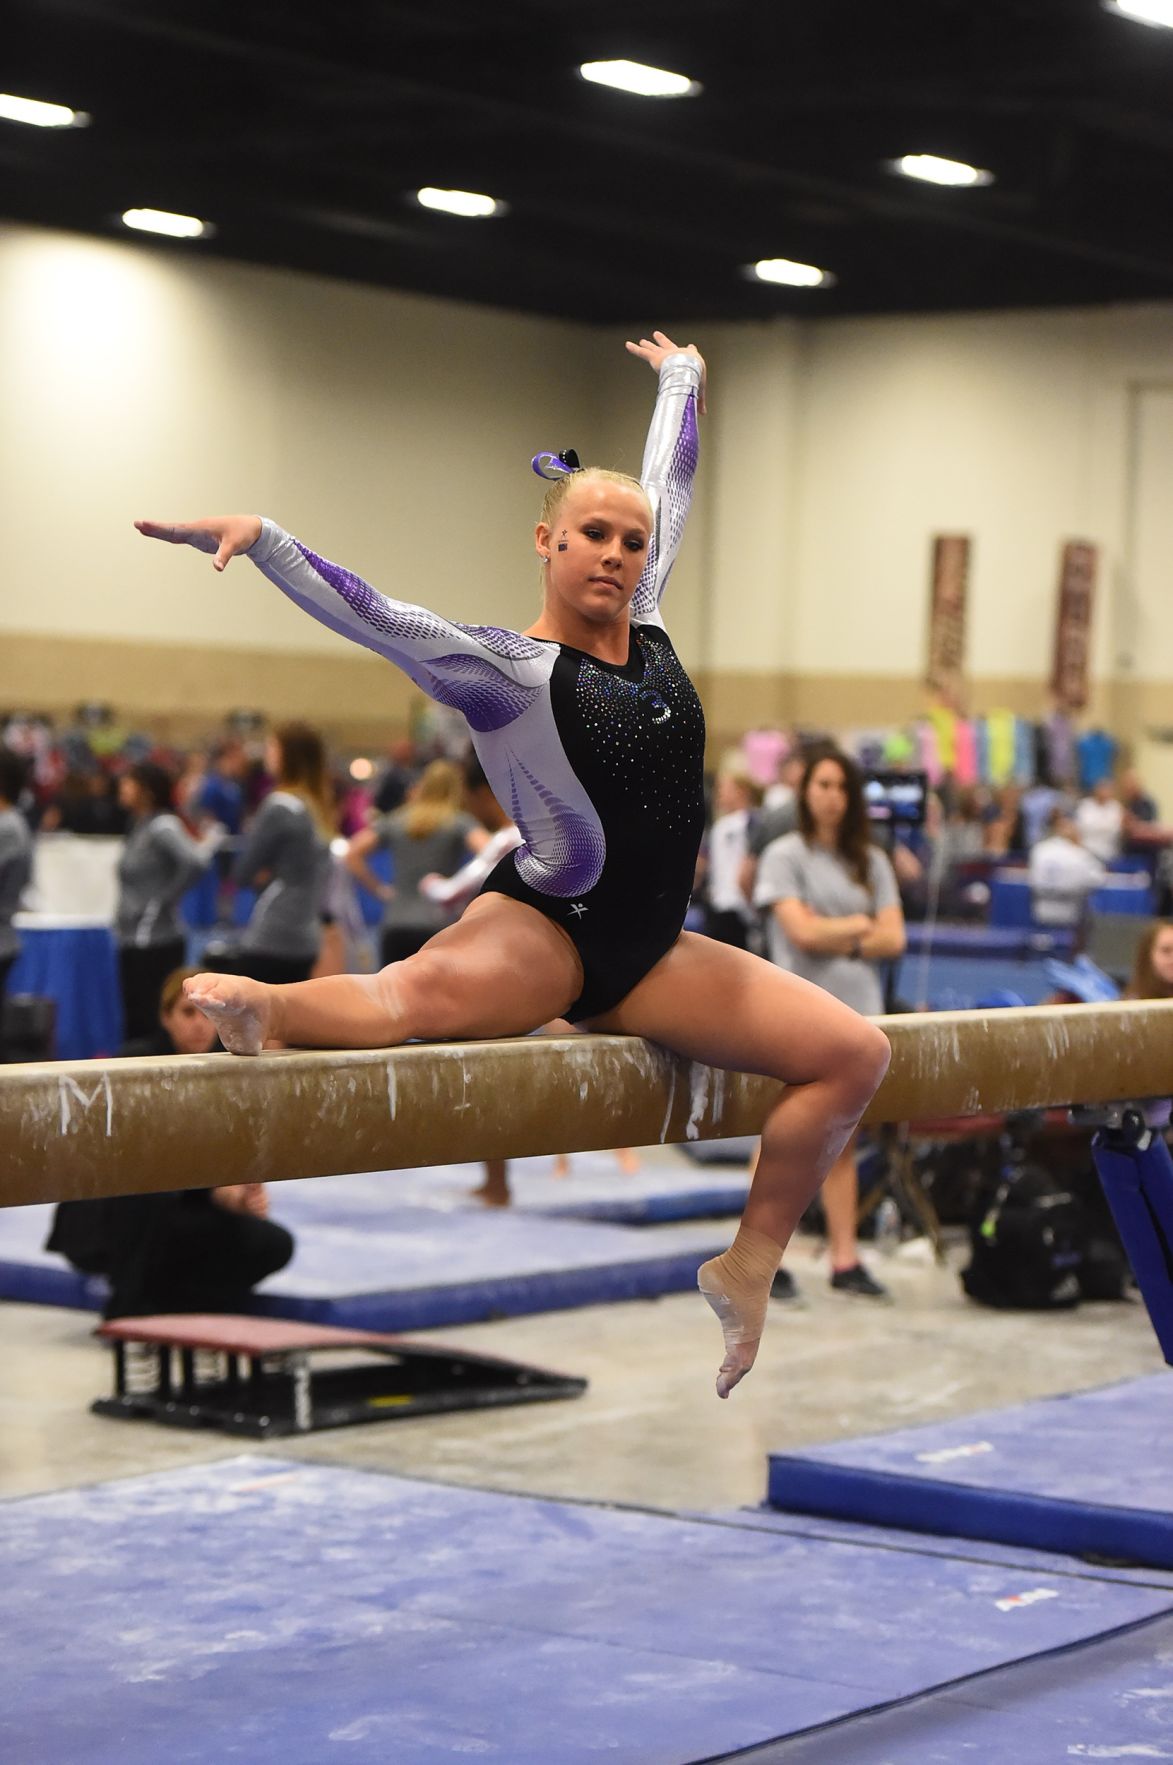 The Colony gymnast places first on balance beam | News | starlocalmedia.com